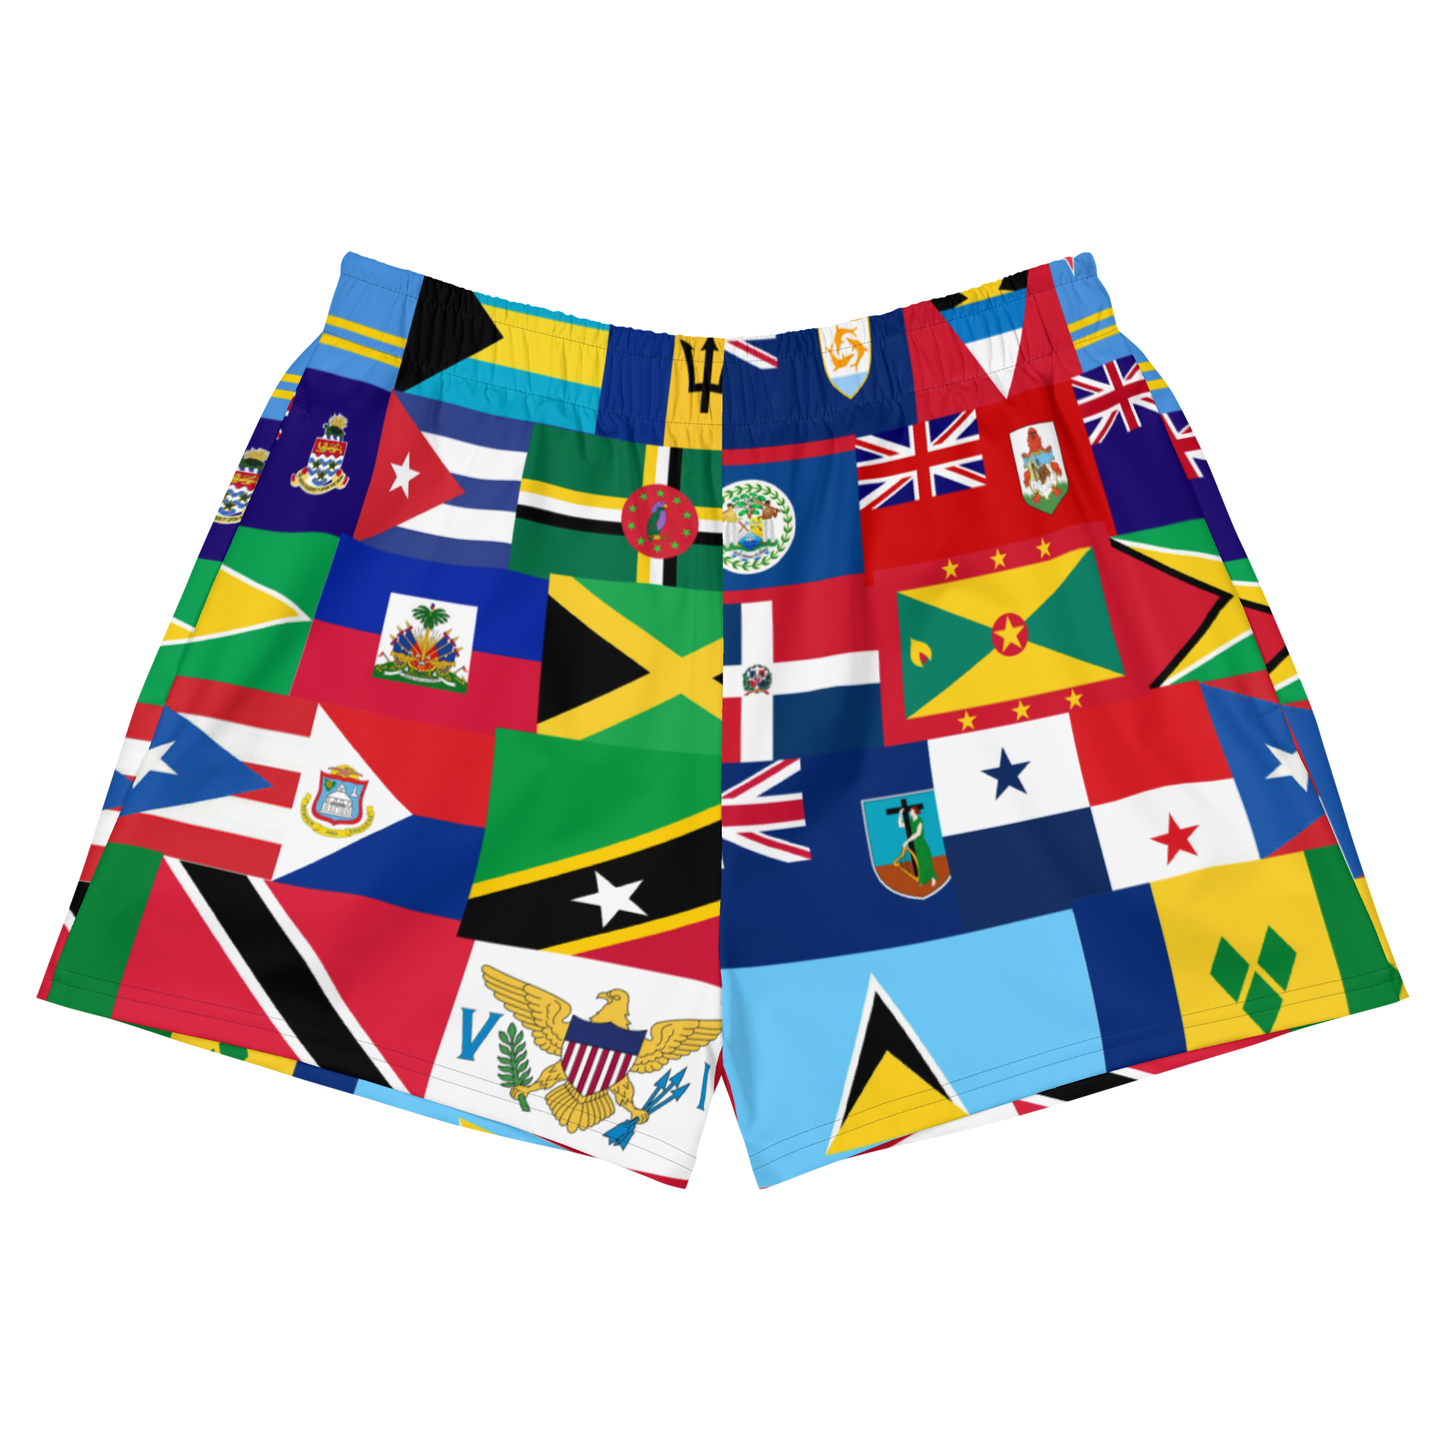 West Indian Flag Women’s Athletic Shorts